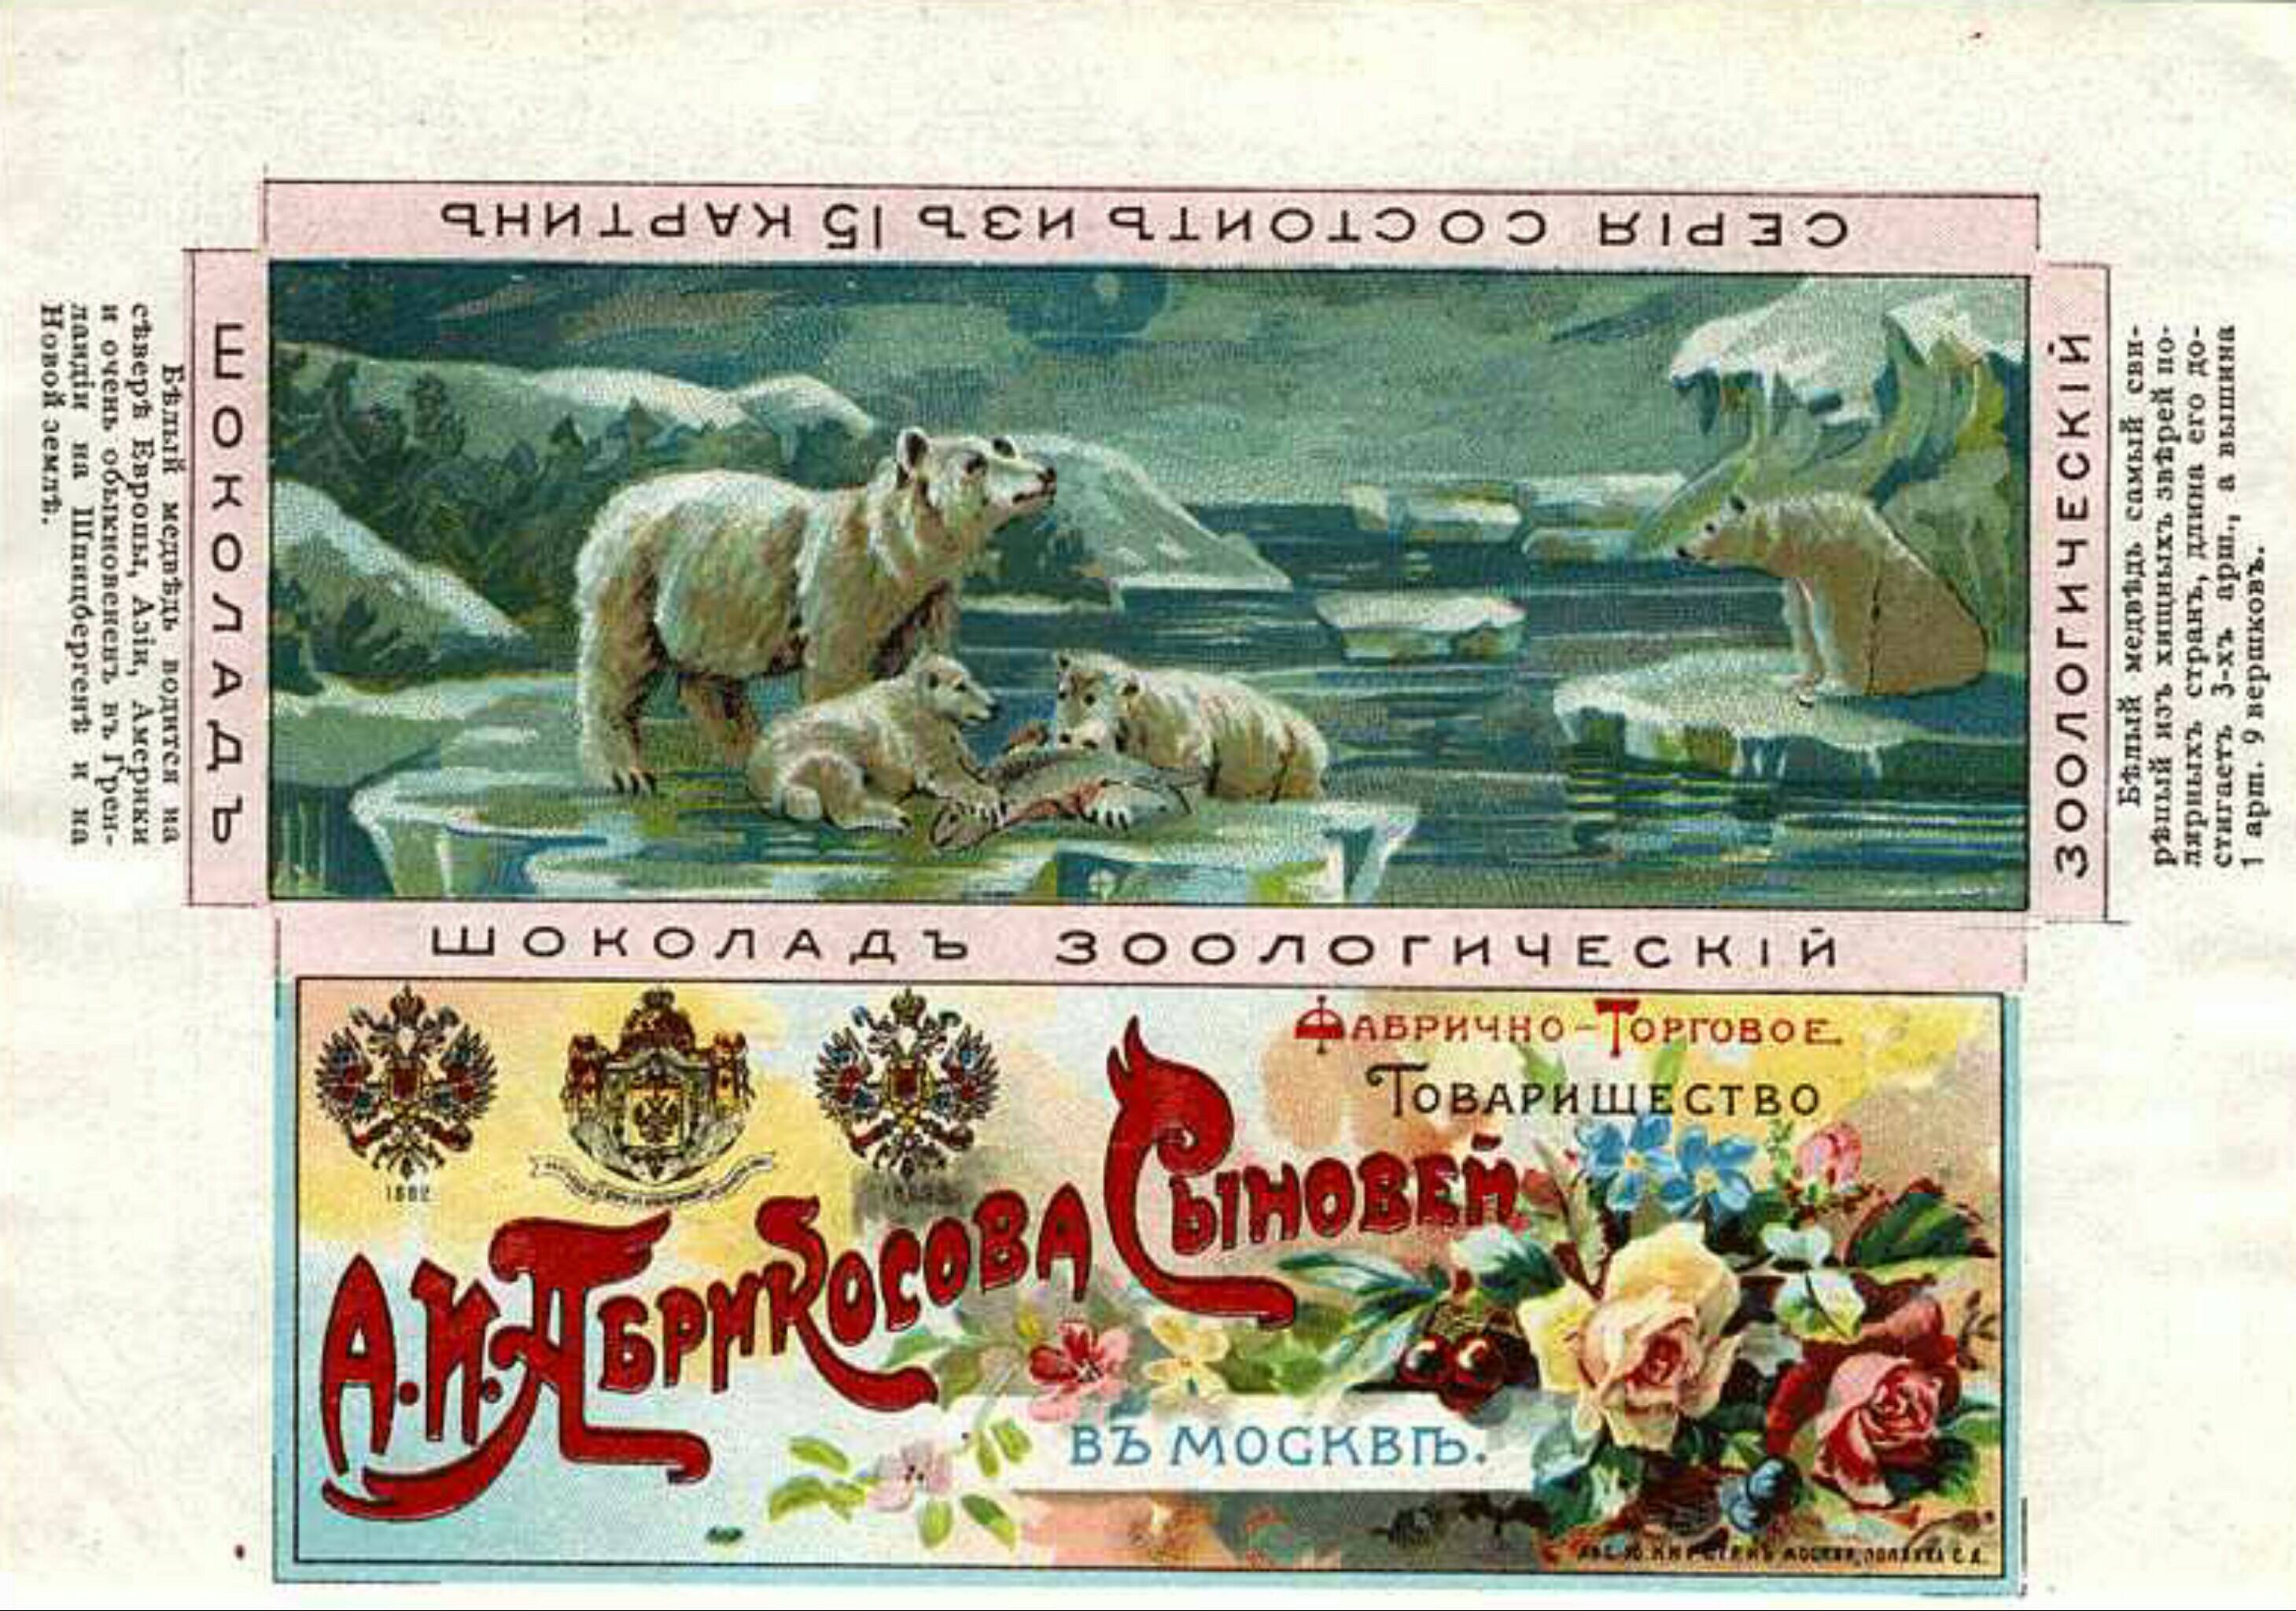 Шоколад «Зоологический» фабрики А.И. Абрикосова